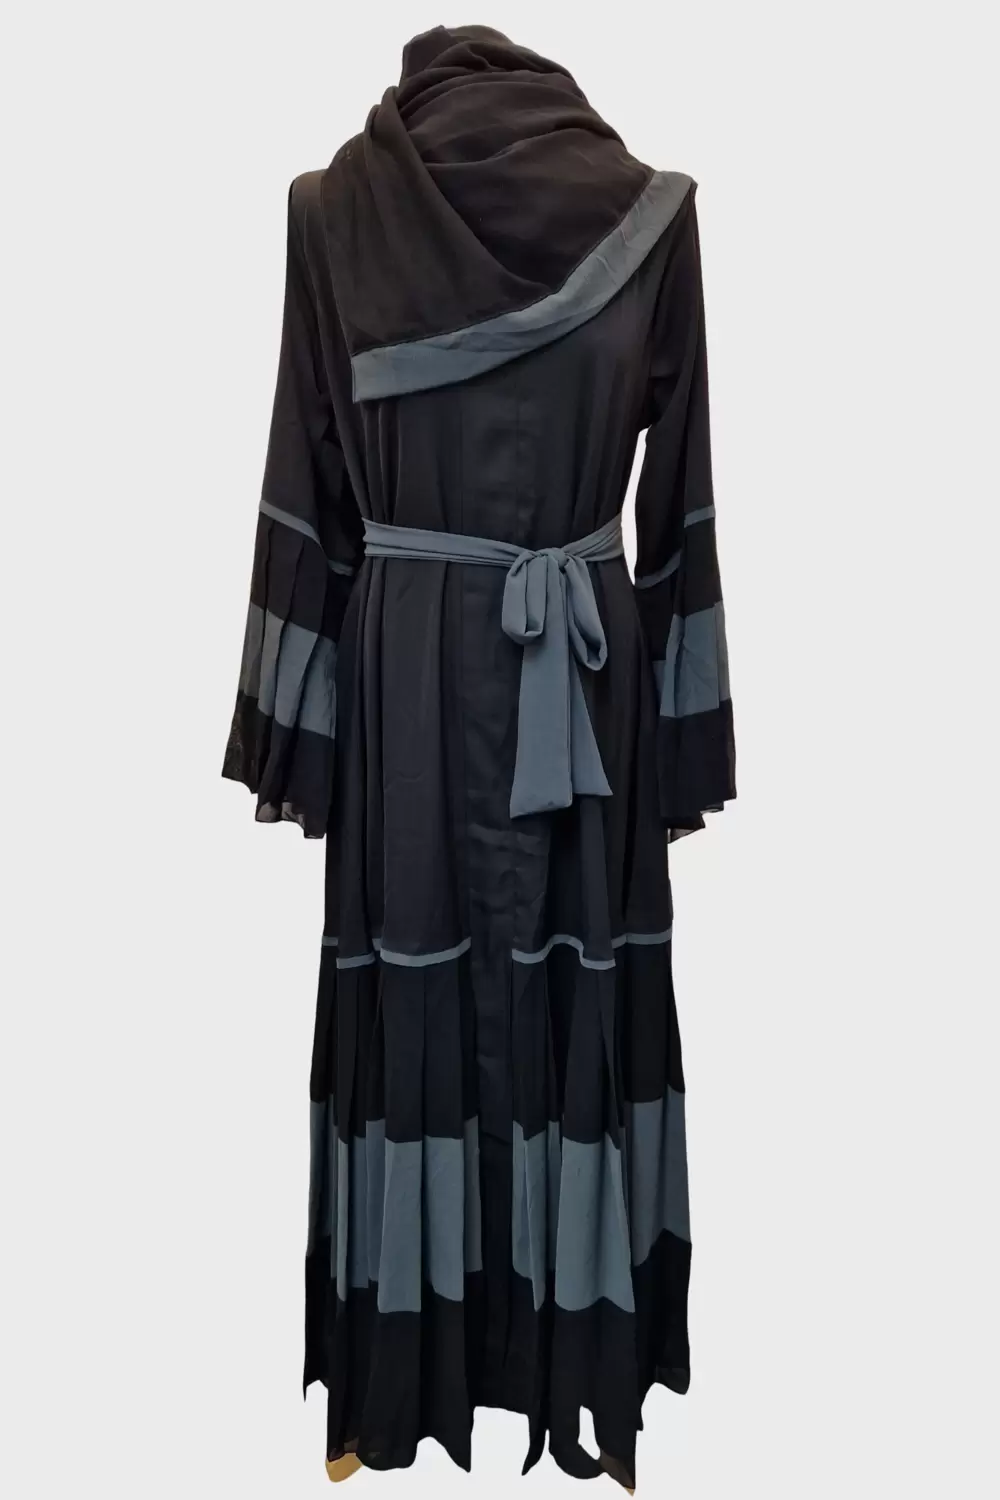 Pleated Abaya in Black with Dark Grey